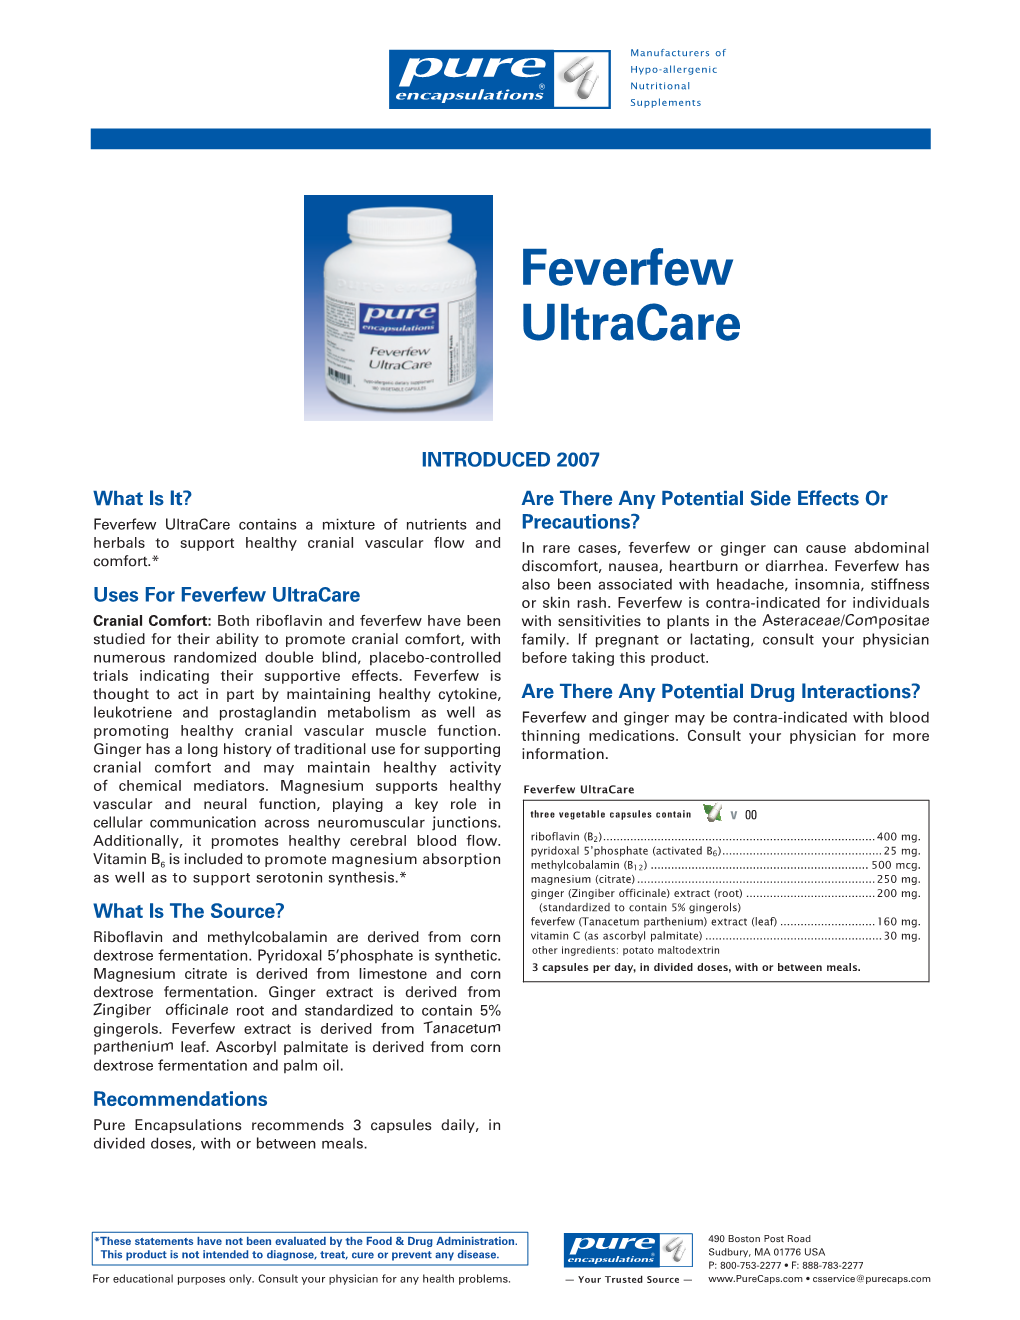 Feverfew Ultracare